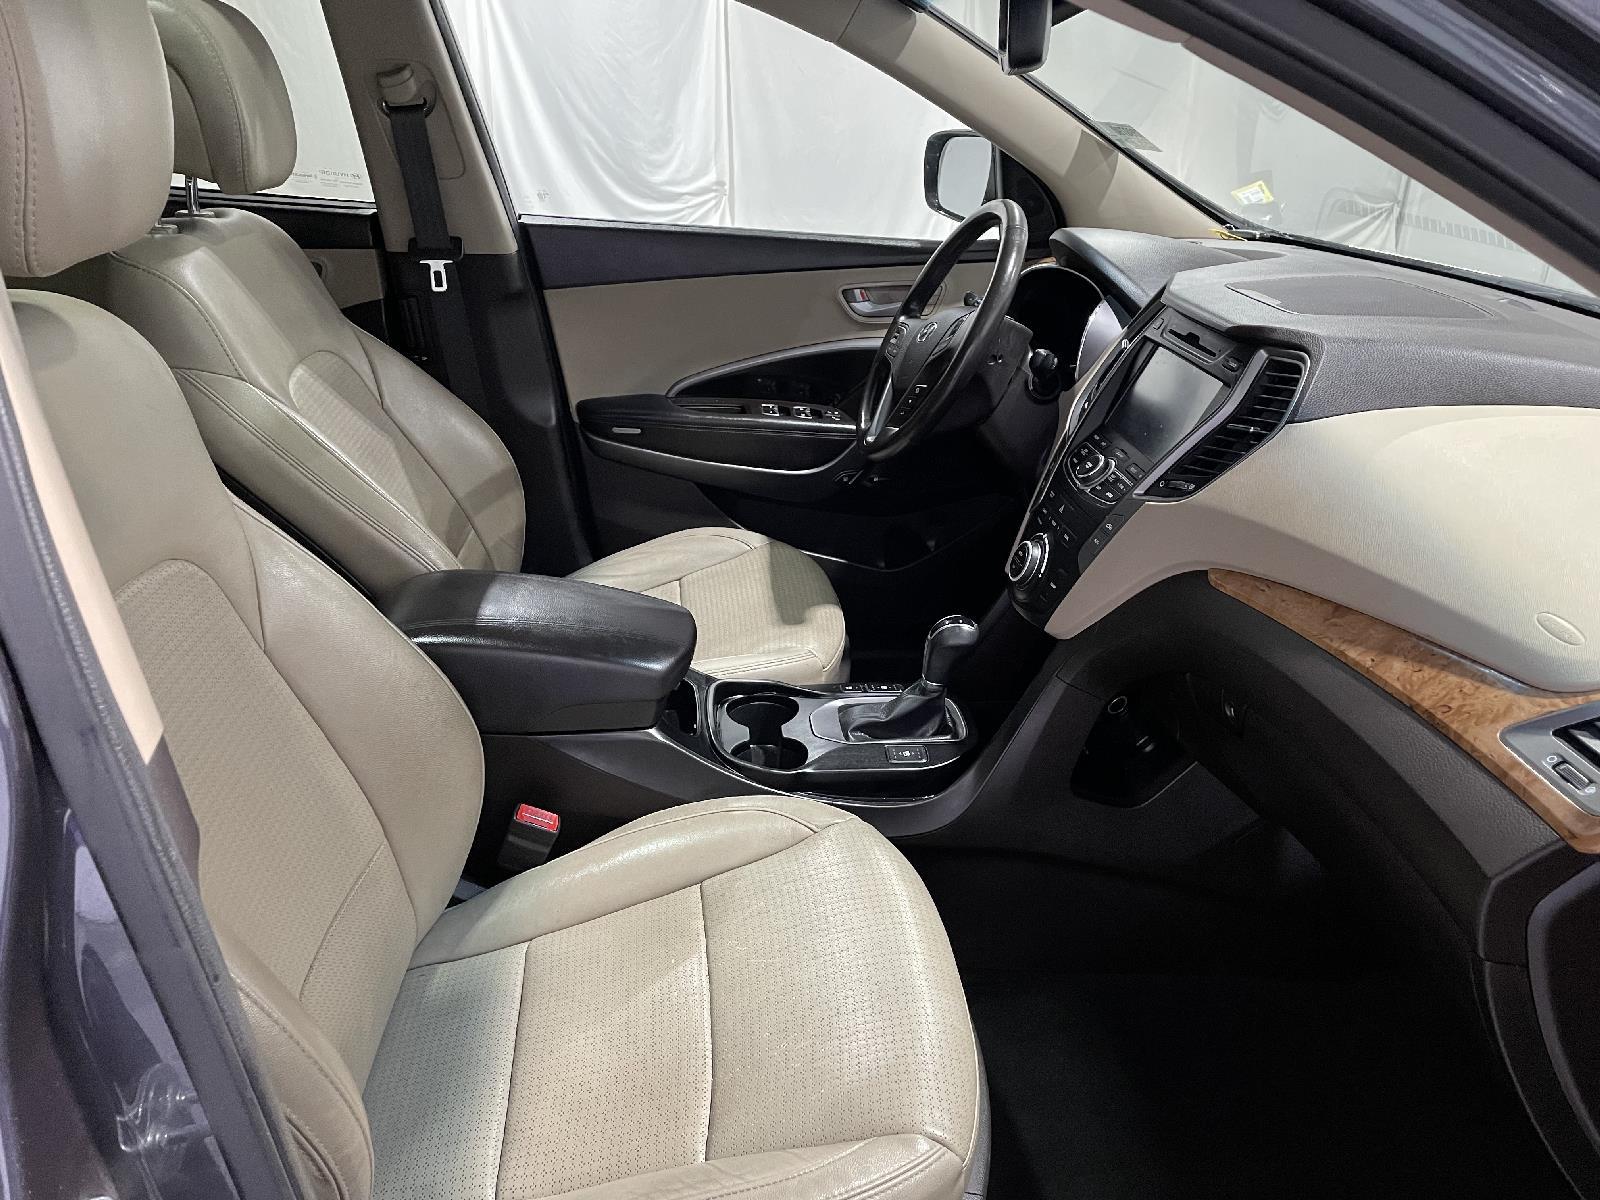 Used 2015 Hyundai Santa Fe Sport  SUV for sale in St Joseph MO